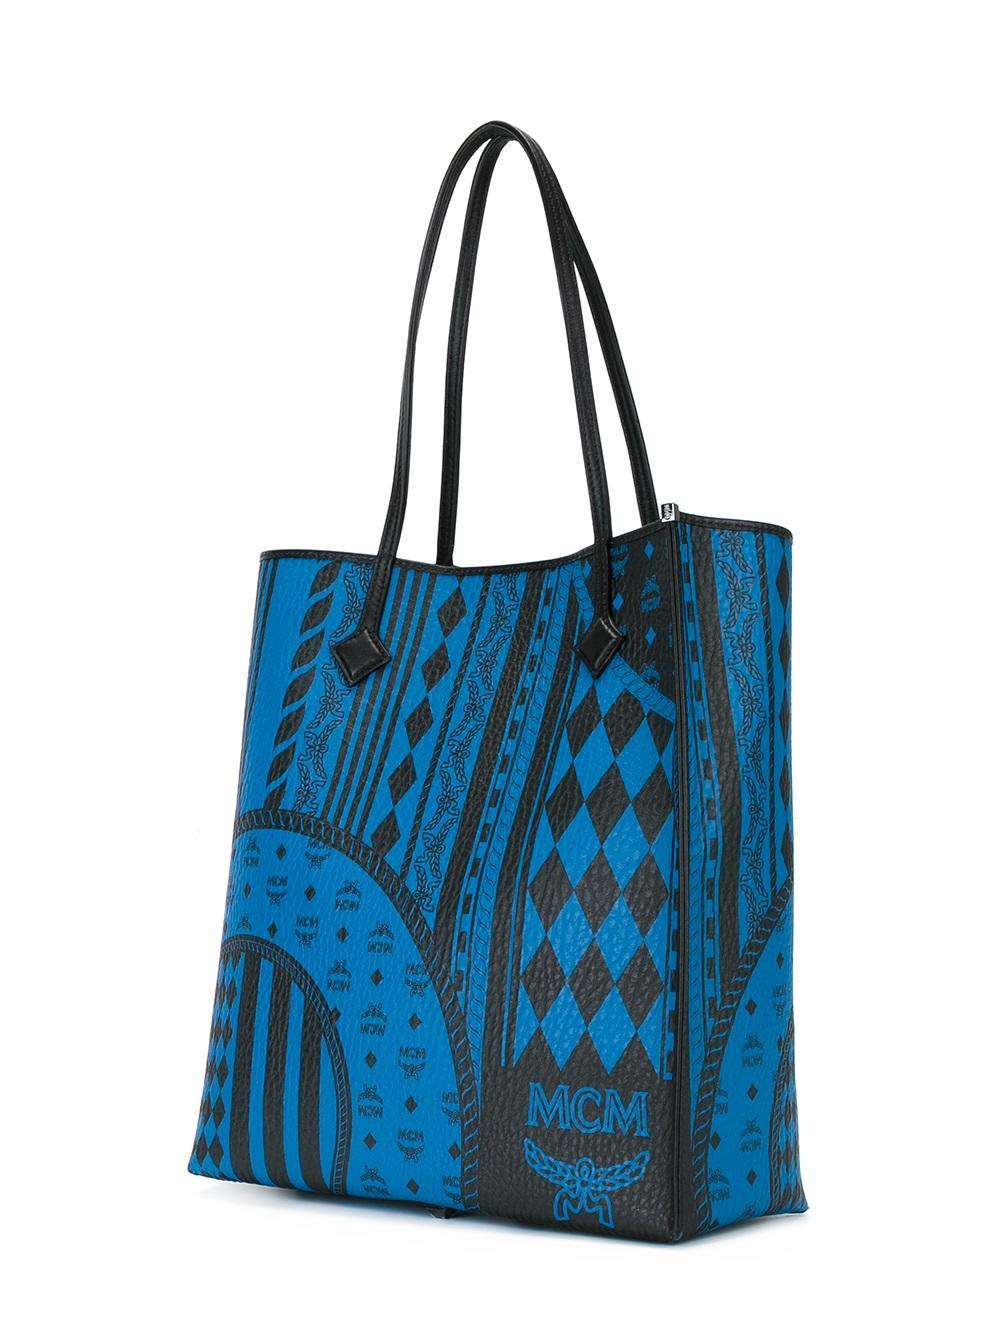 Lyst - Mcm Jacquard Tote Bag in Blue